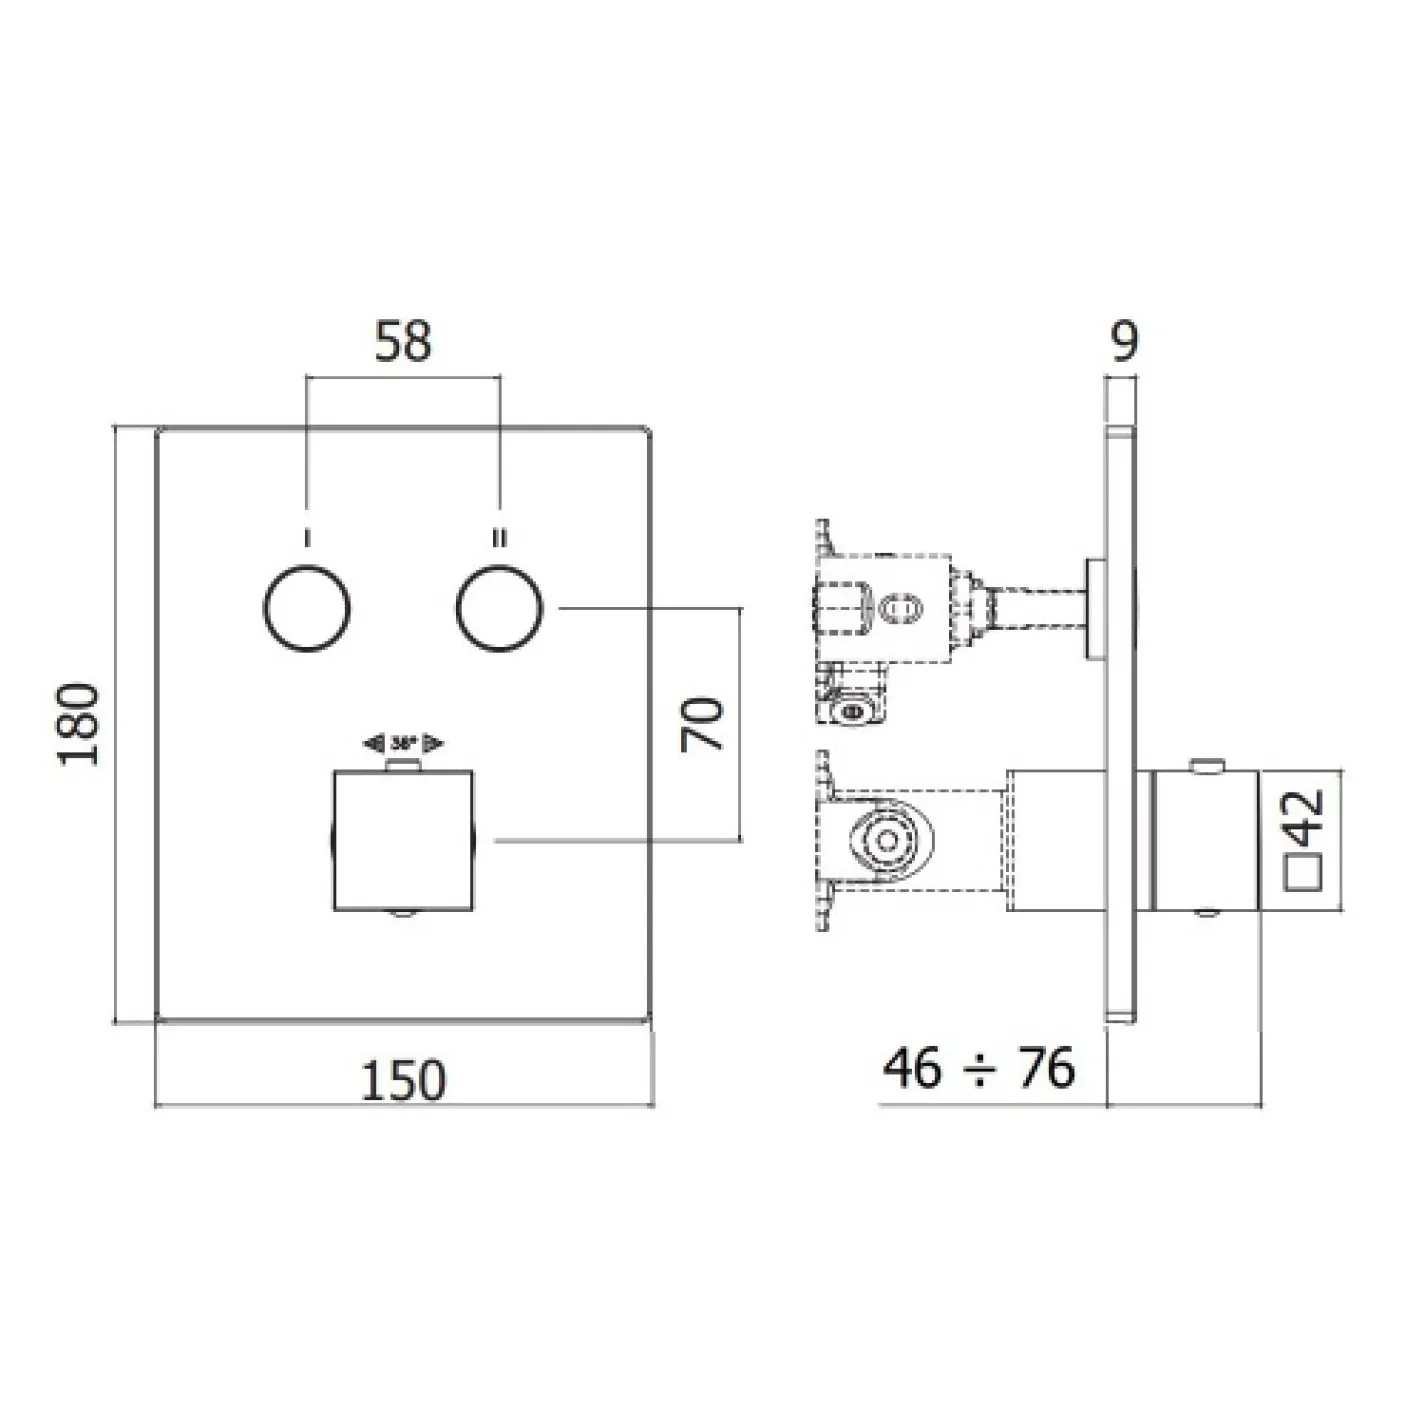 Термостат для душа (внешняя часть) Paffoni Compact box CPT 518 CR скрытого монтажа (2 функции), хром - Фото 1